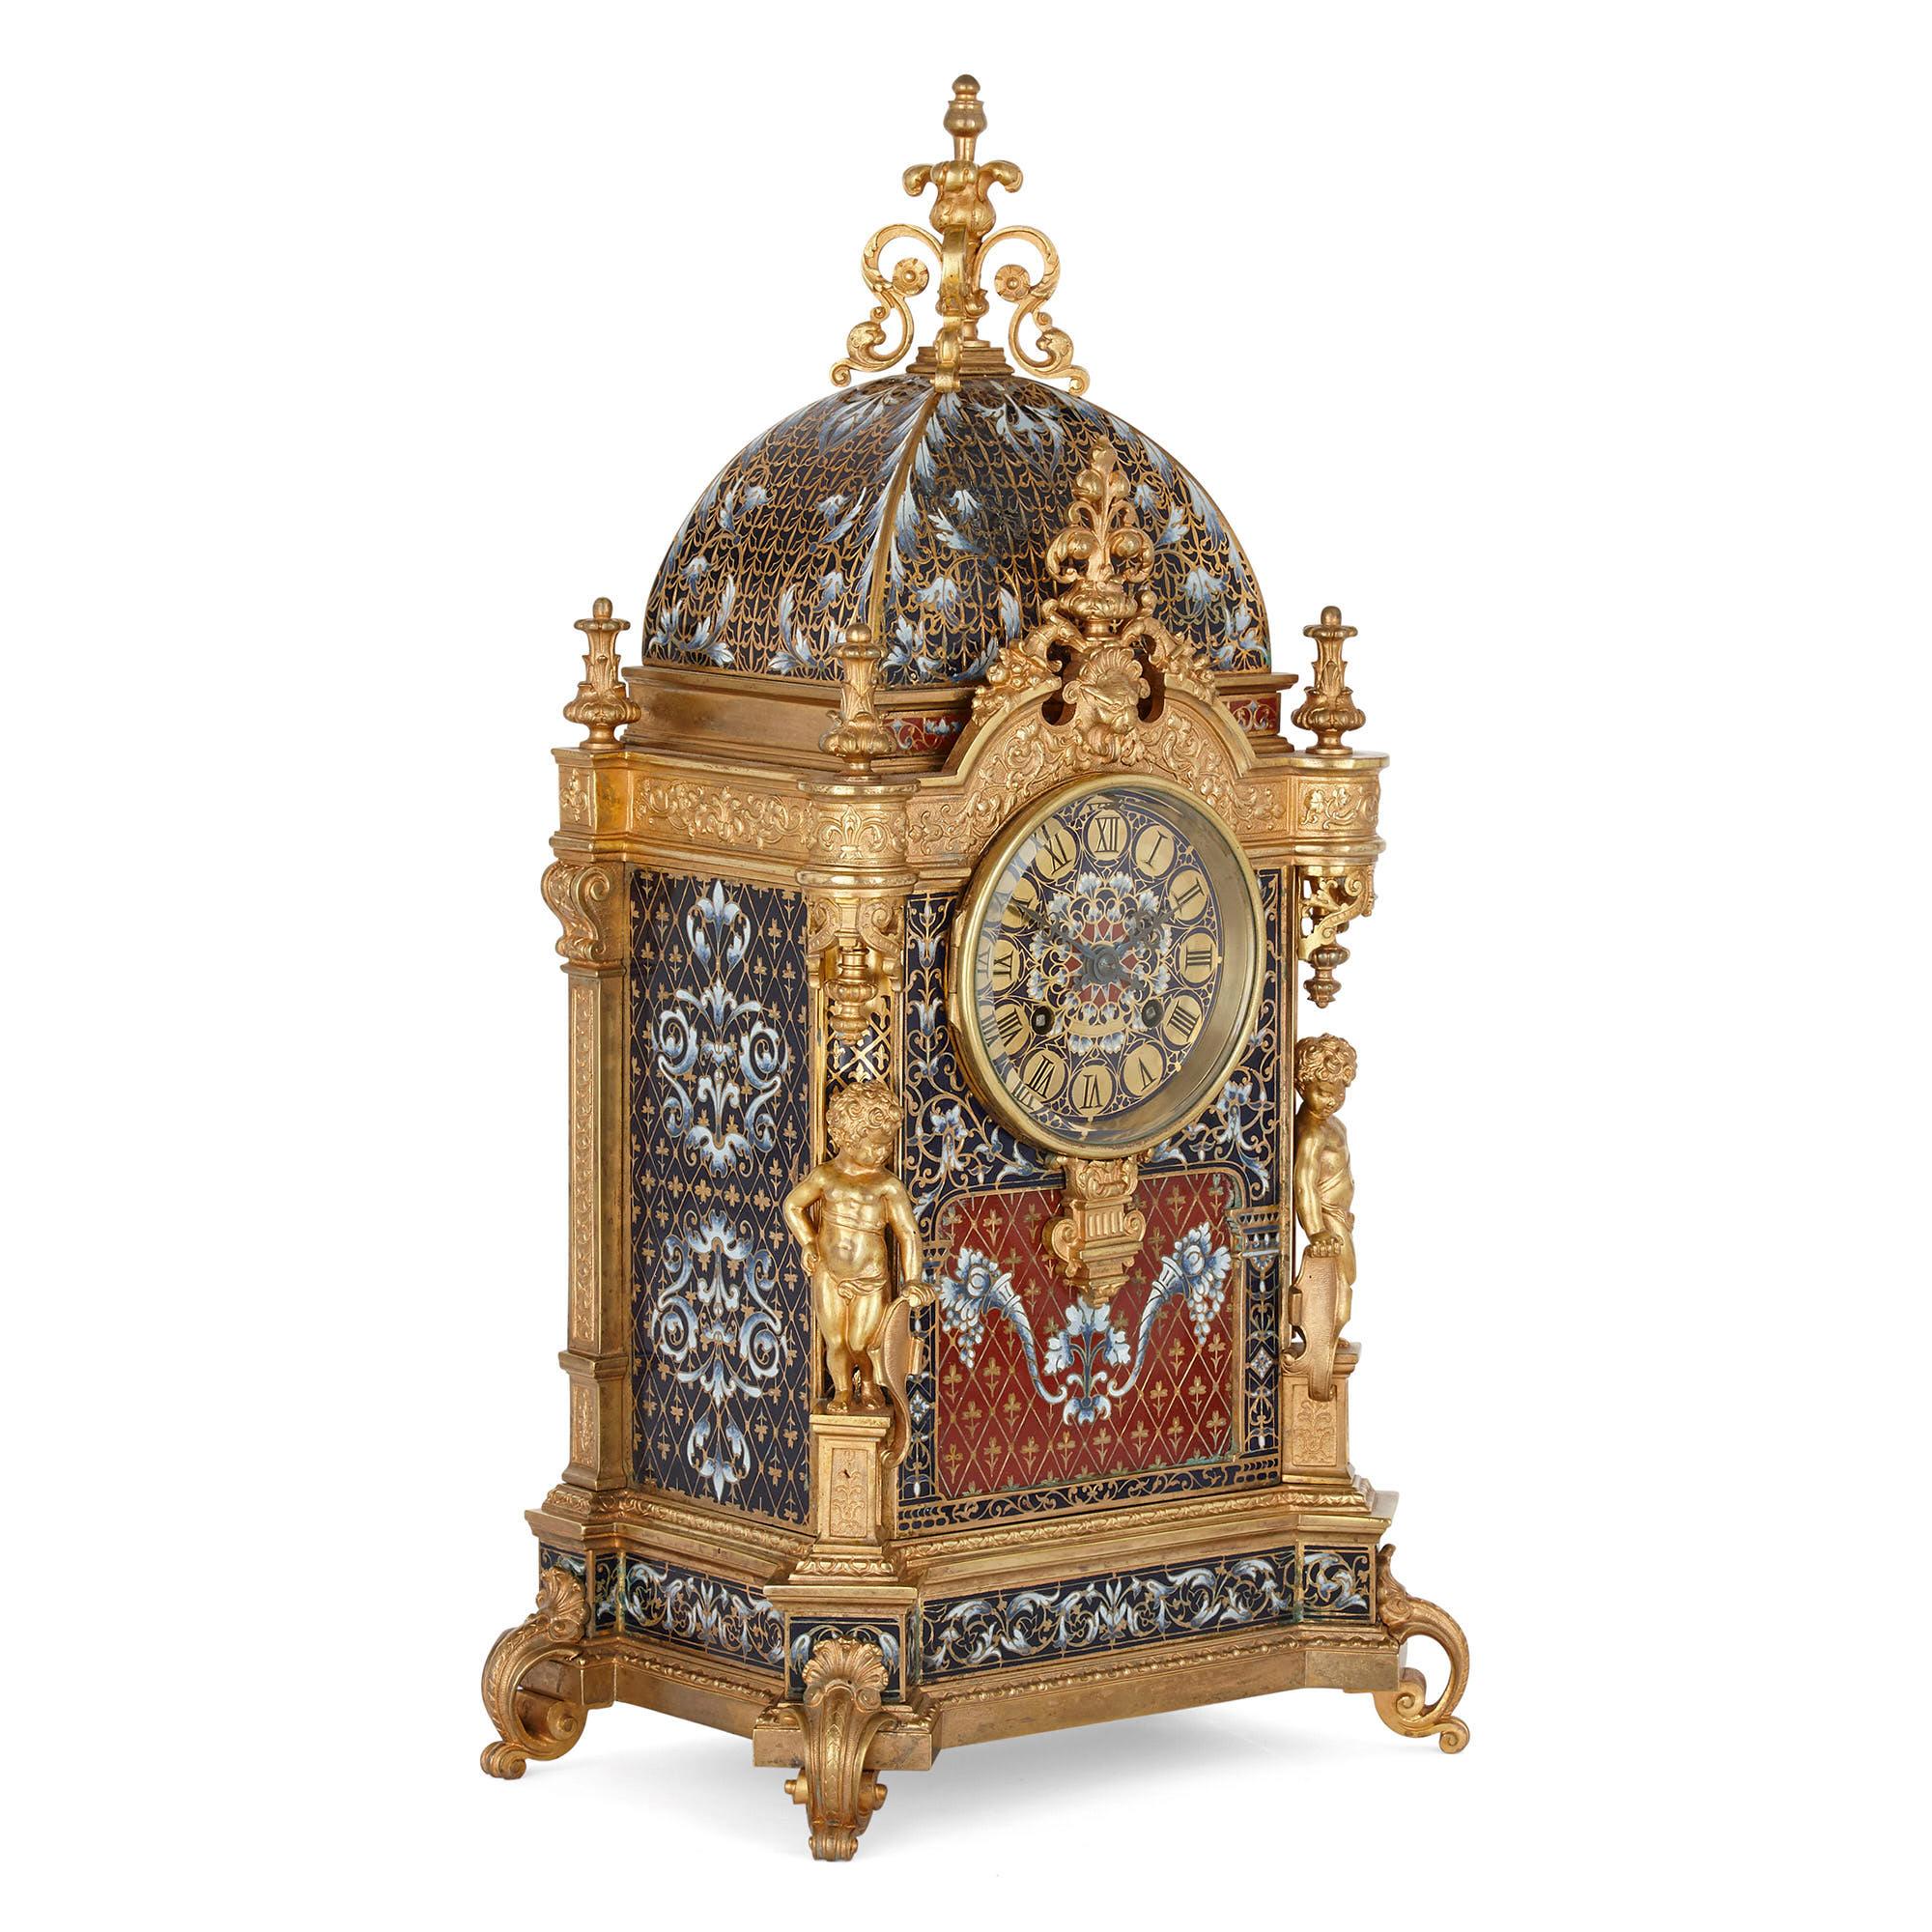 Belle Époque period gilt bronze and enamel clock set
French, late 19th century
Measures: Clock: Height 46cm, width 23cm, depth 15cm
Vases: Height 29cm, diameter 11.5cm
Candlesticks: Height 26.5cm, diameter 10cm

This superb clock set comprises